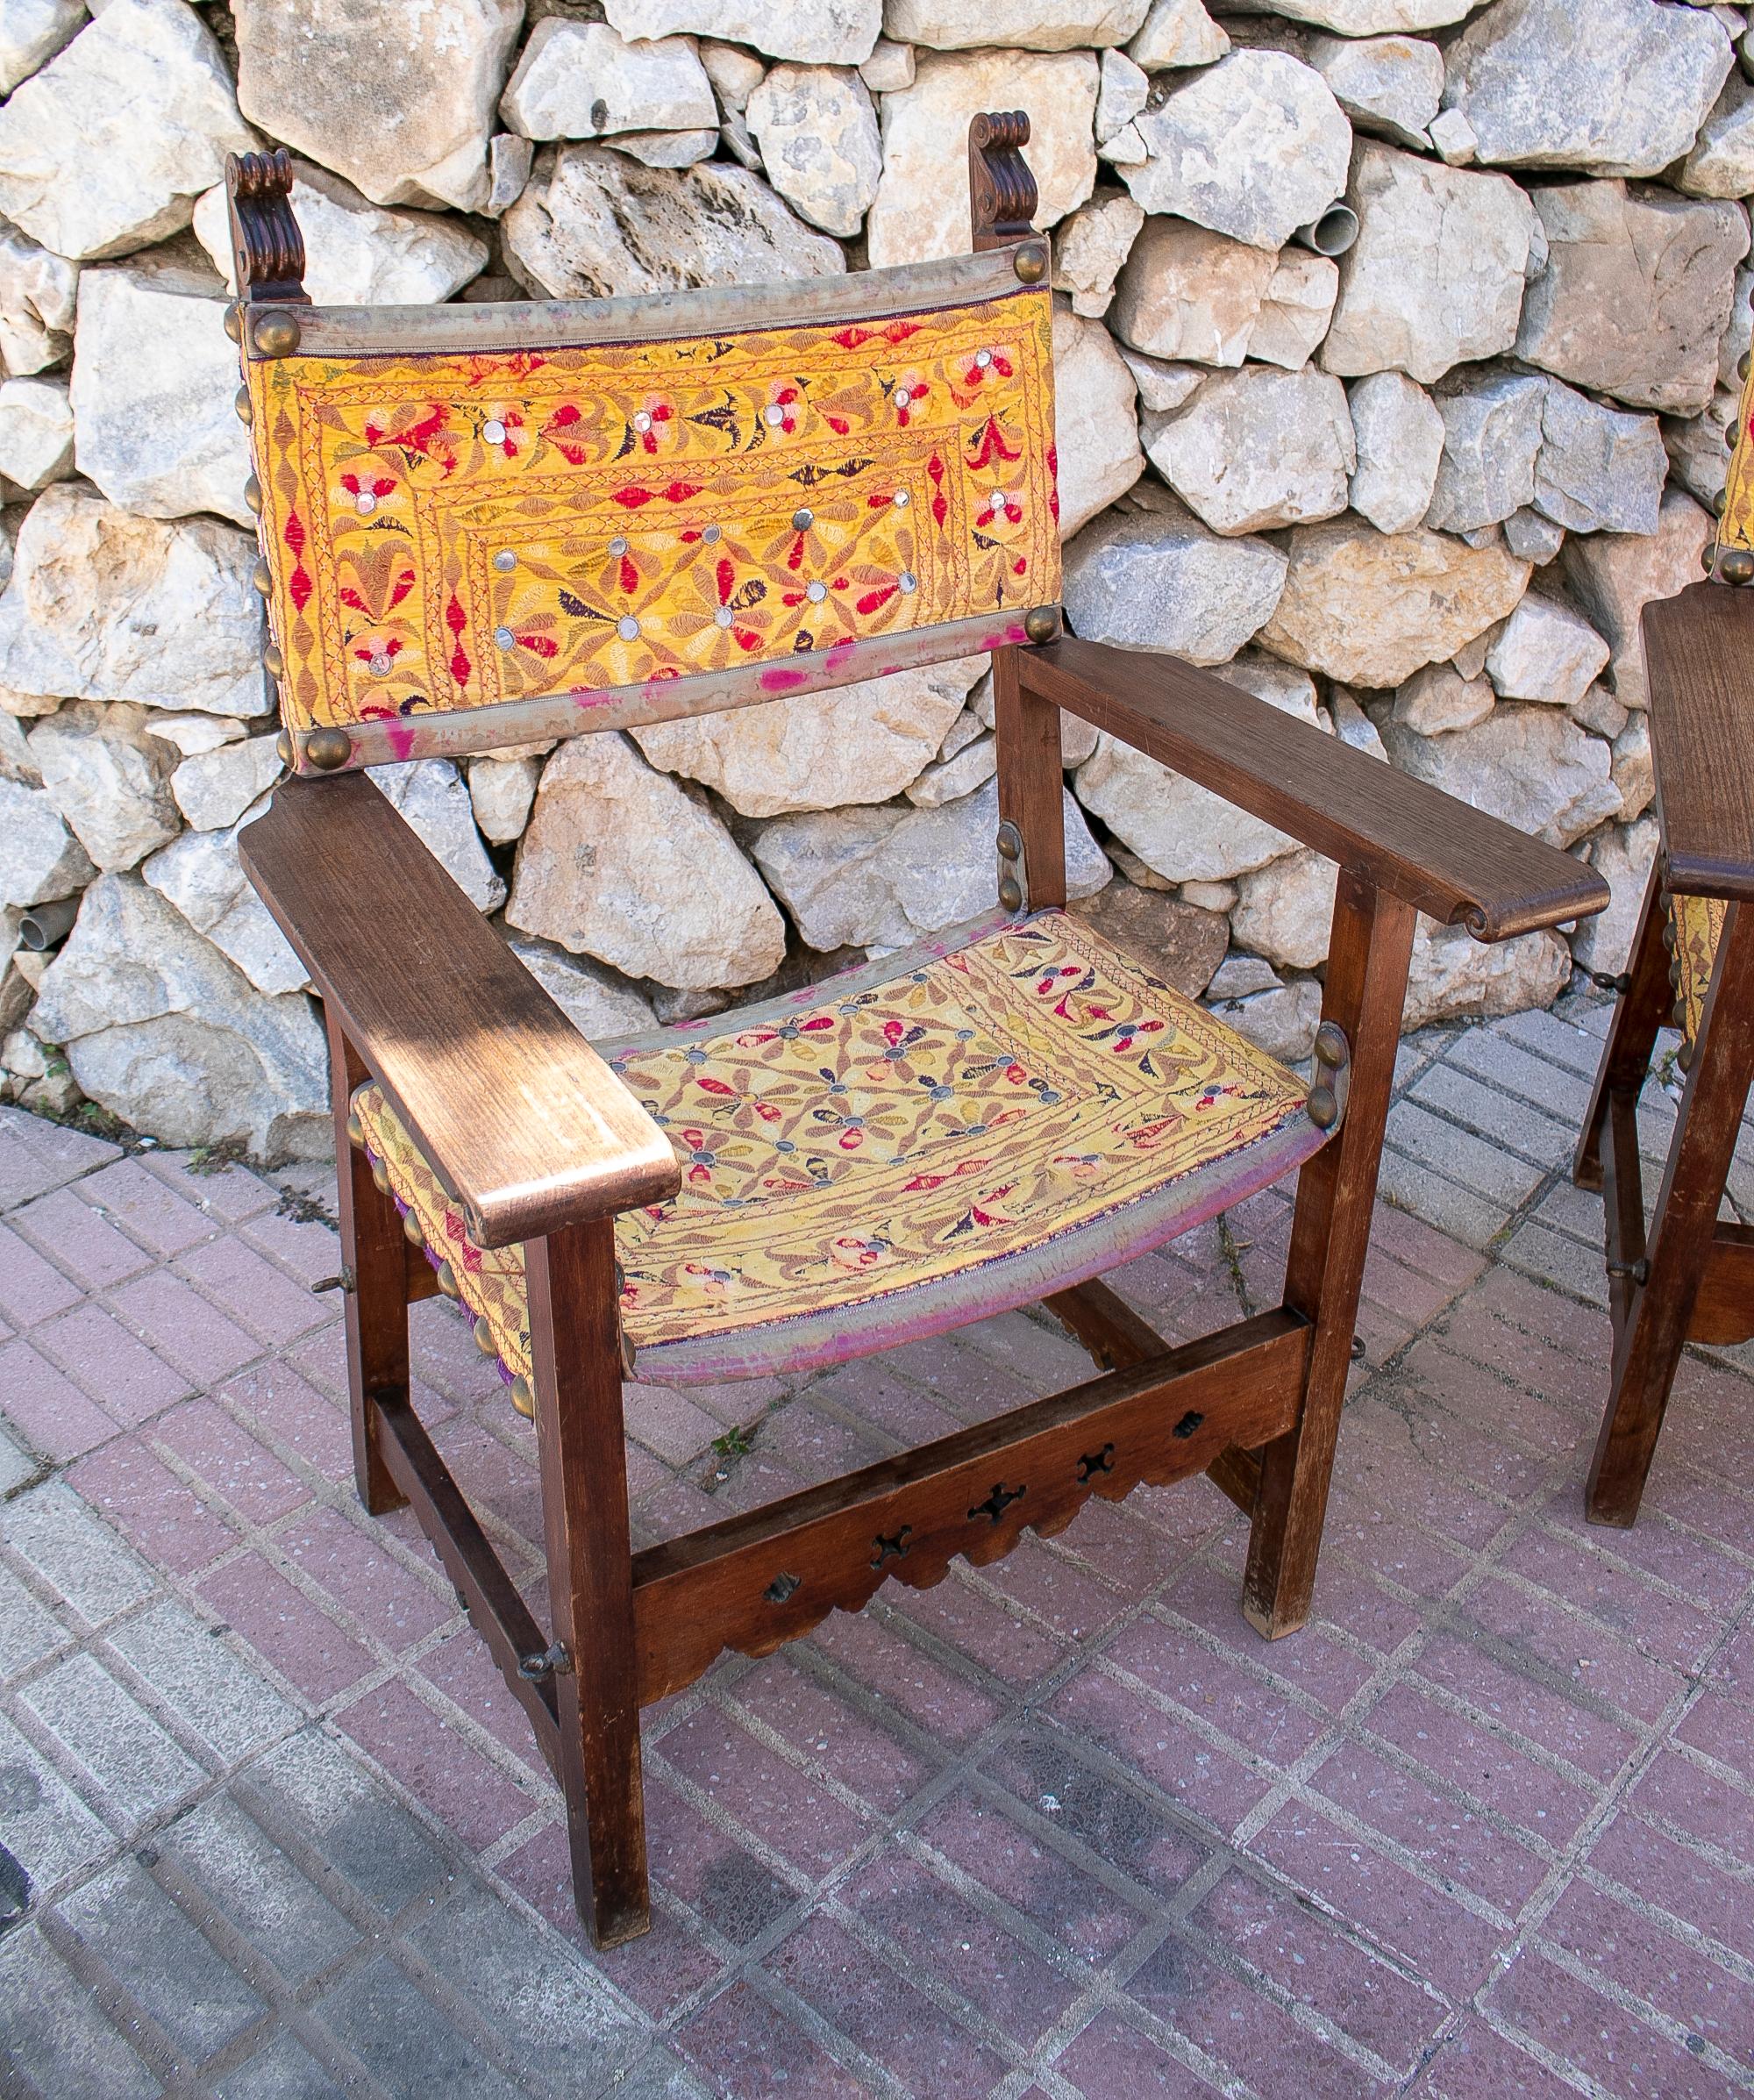 Pareja de sillones fraileros del S XVIII con tapicería posterior antigua. España.